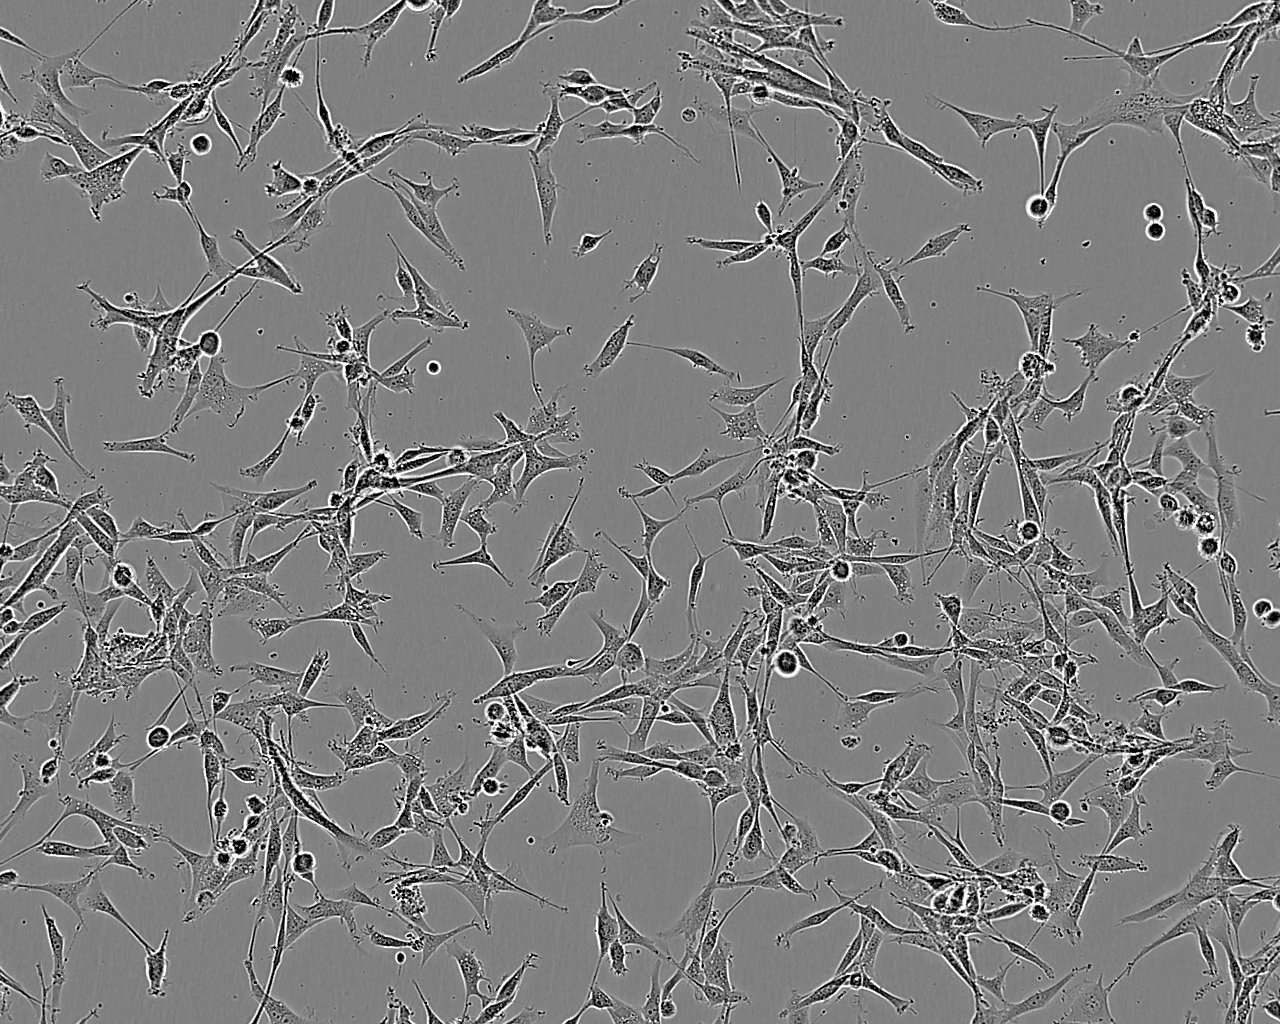 UMR-106 epithelioid cells大鼠骨肉瘤细胞系,UMR-106 epithelioid cells